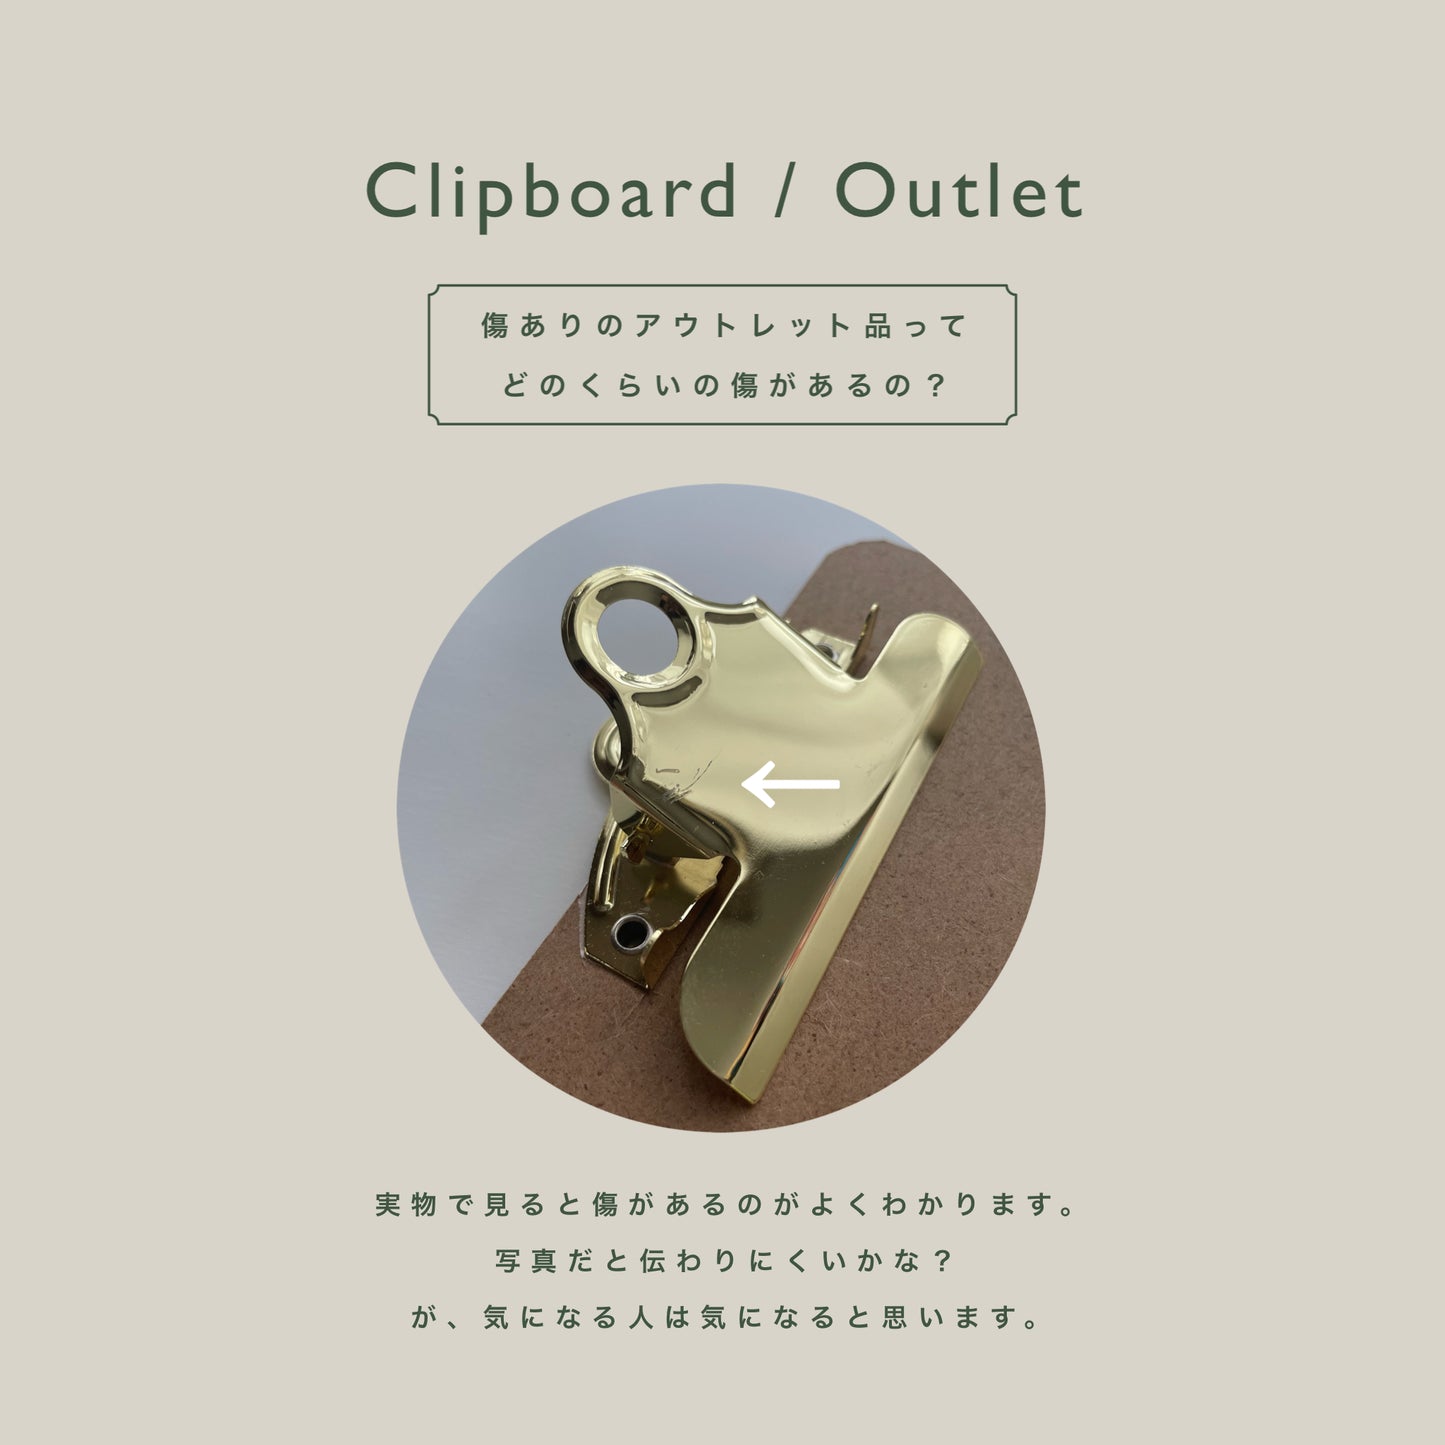 clipboard